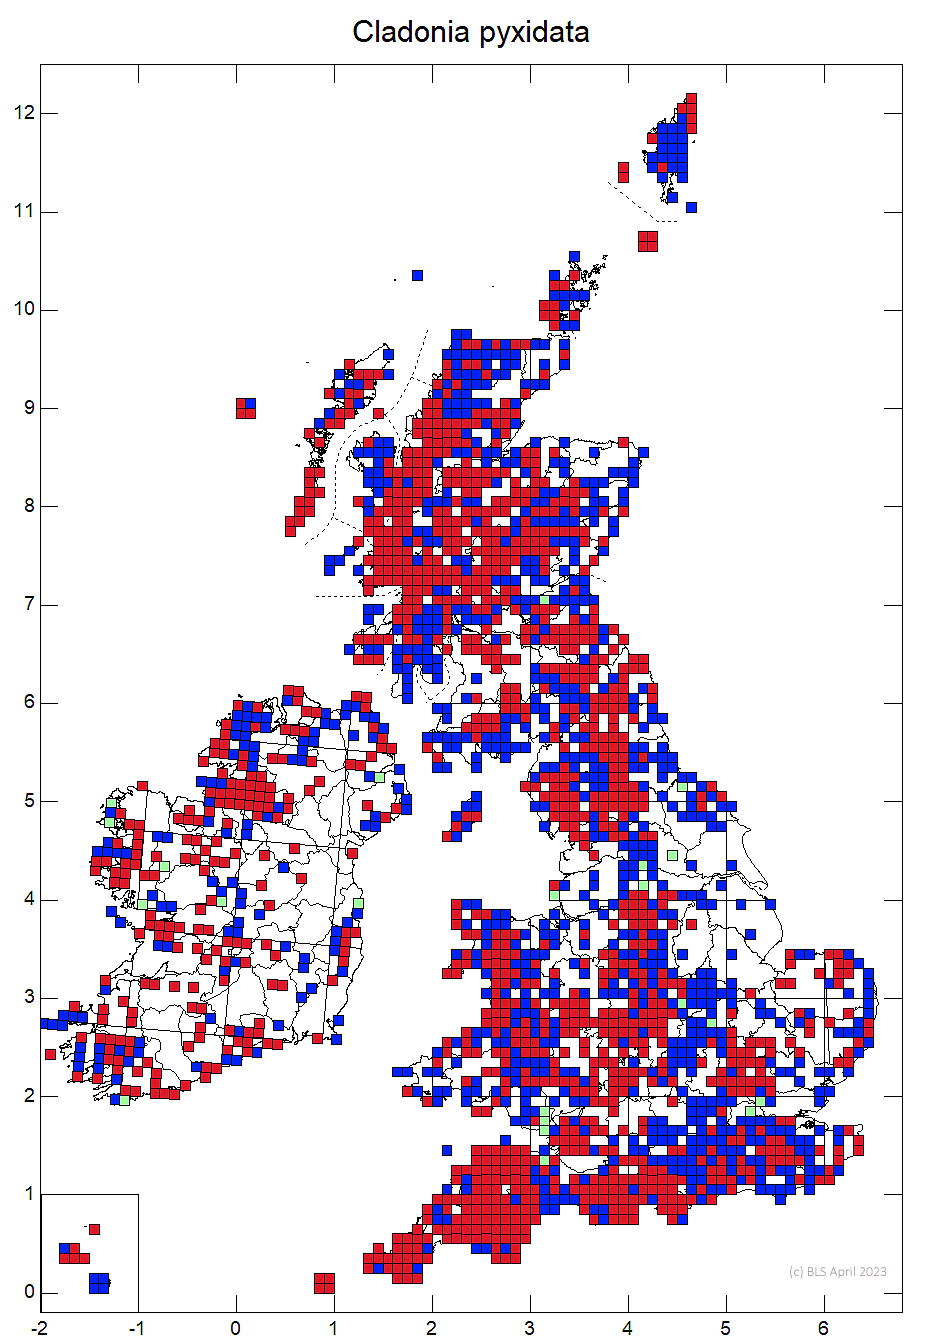 Cladonia pyxidata 10km sq distribution map